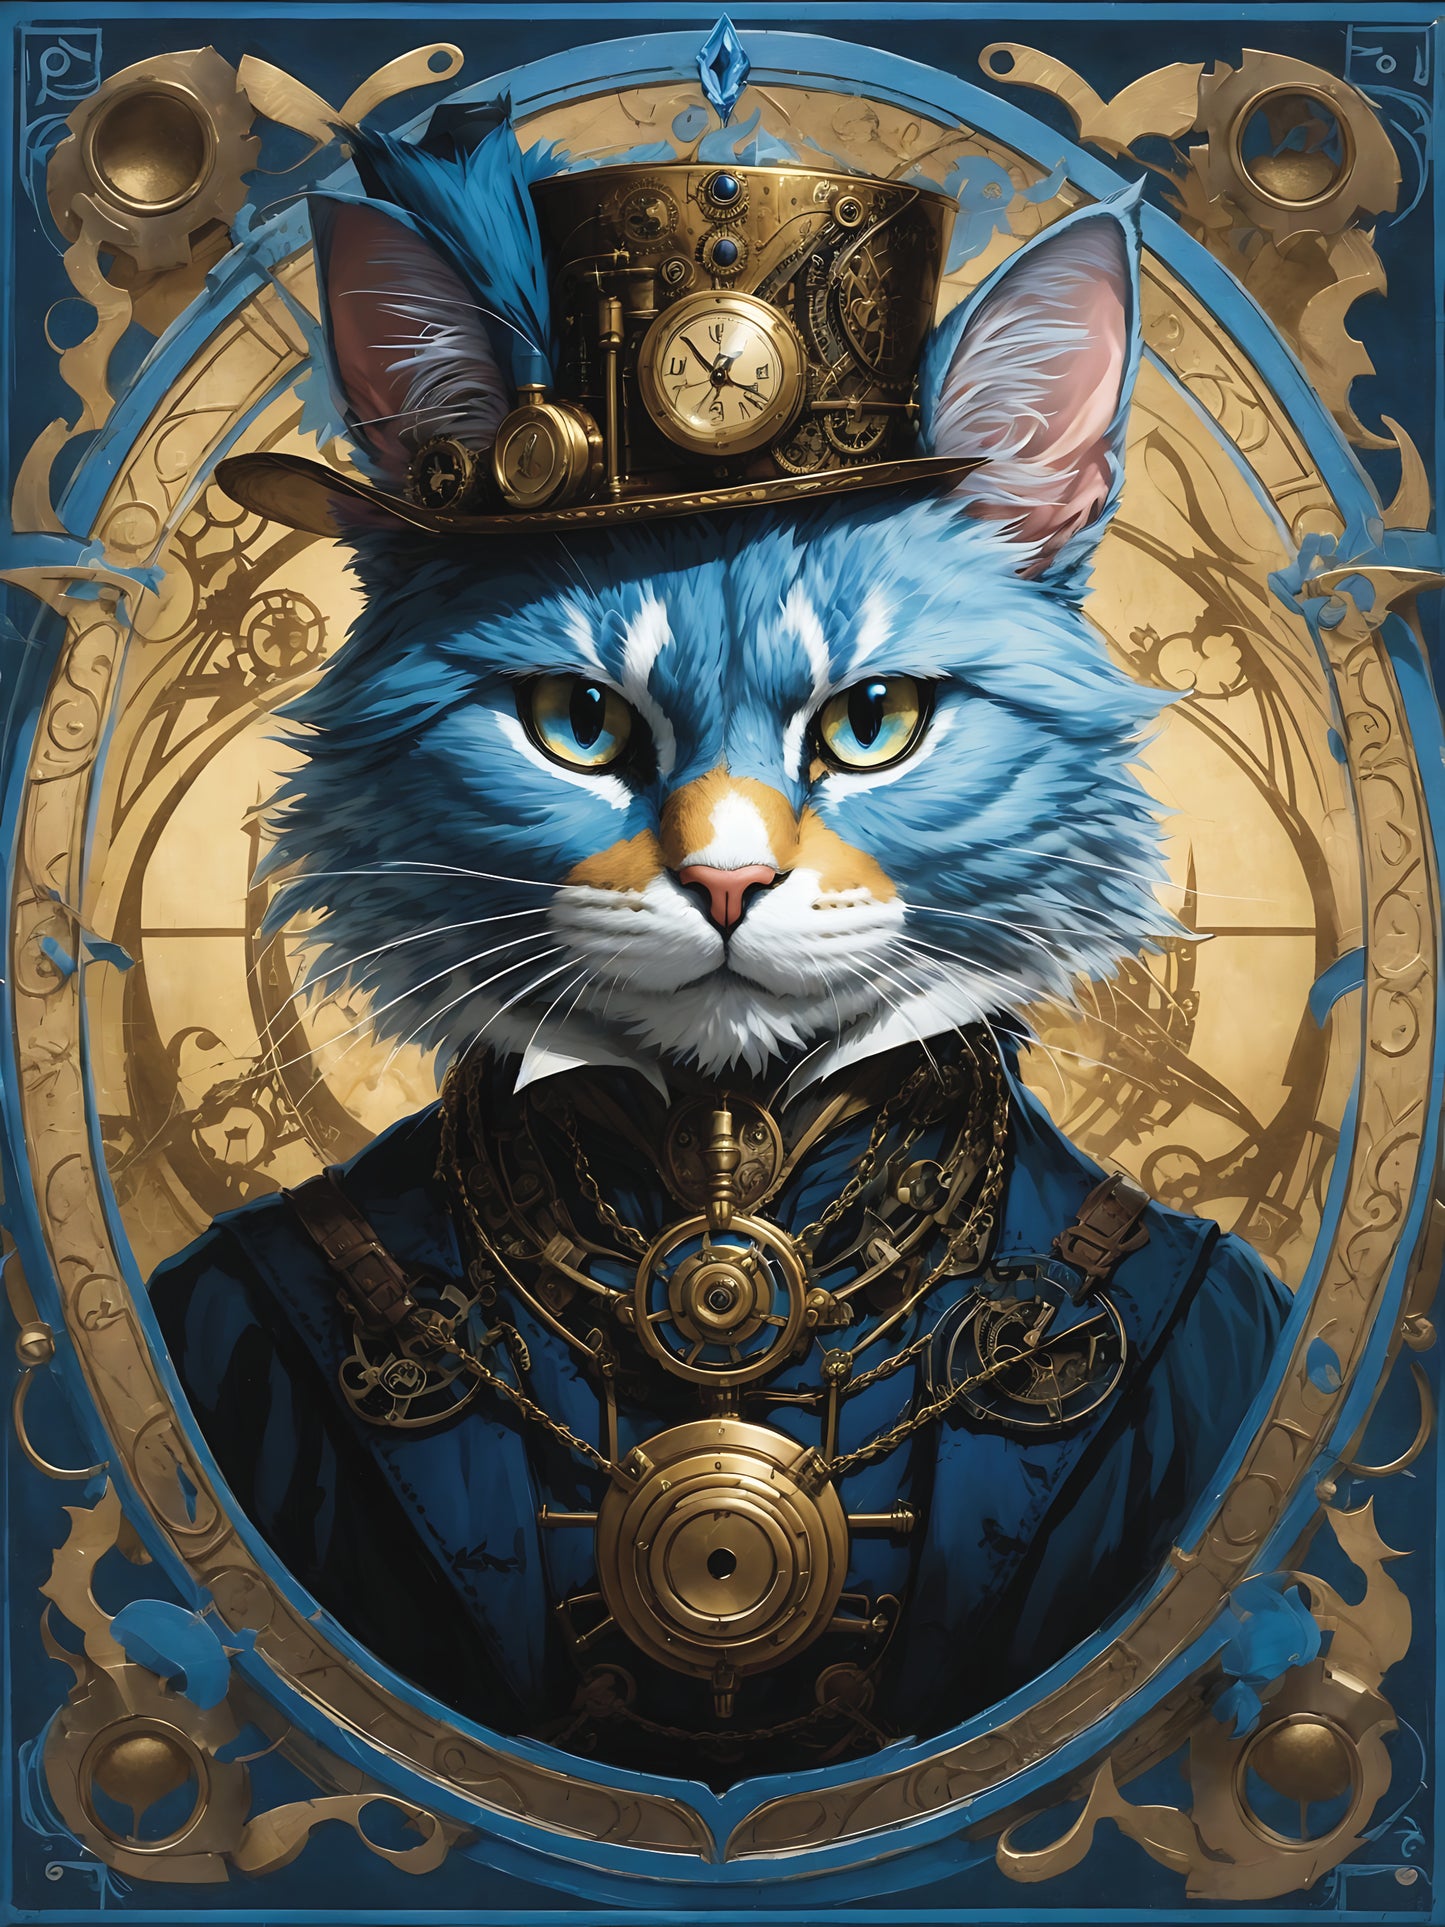 Leinwandbild Sir Purrington Wayfinder Tarot Stempunk Katze